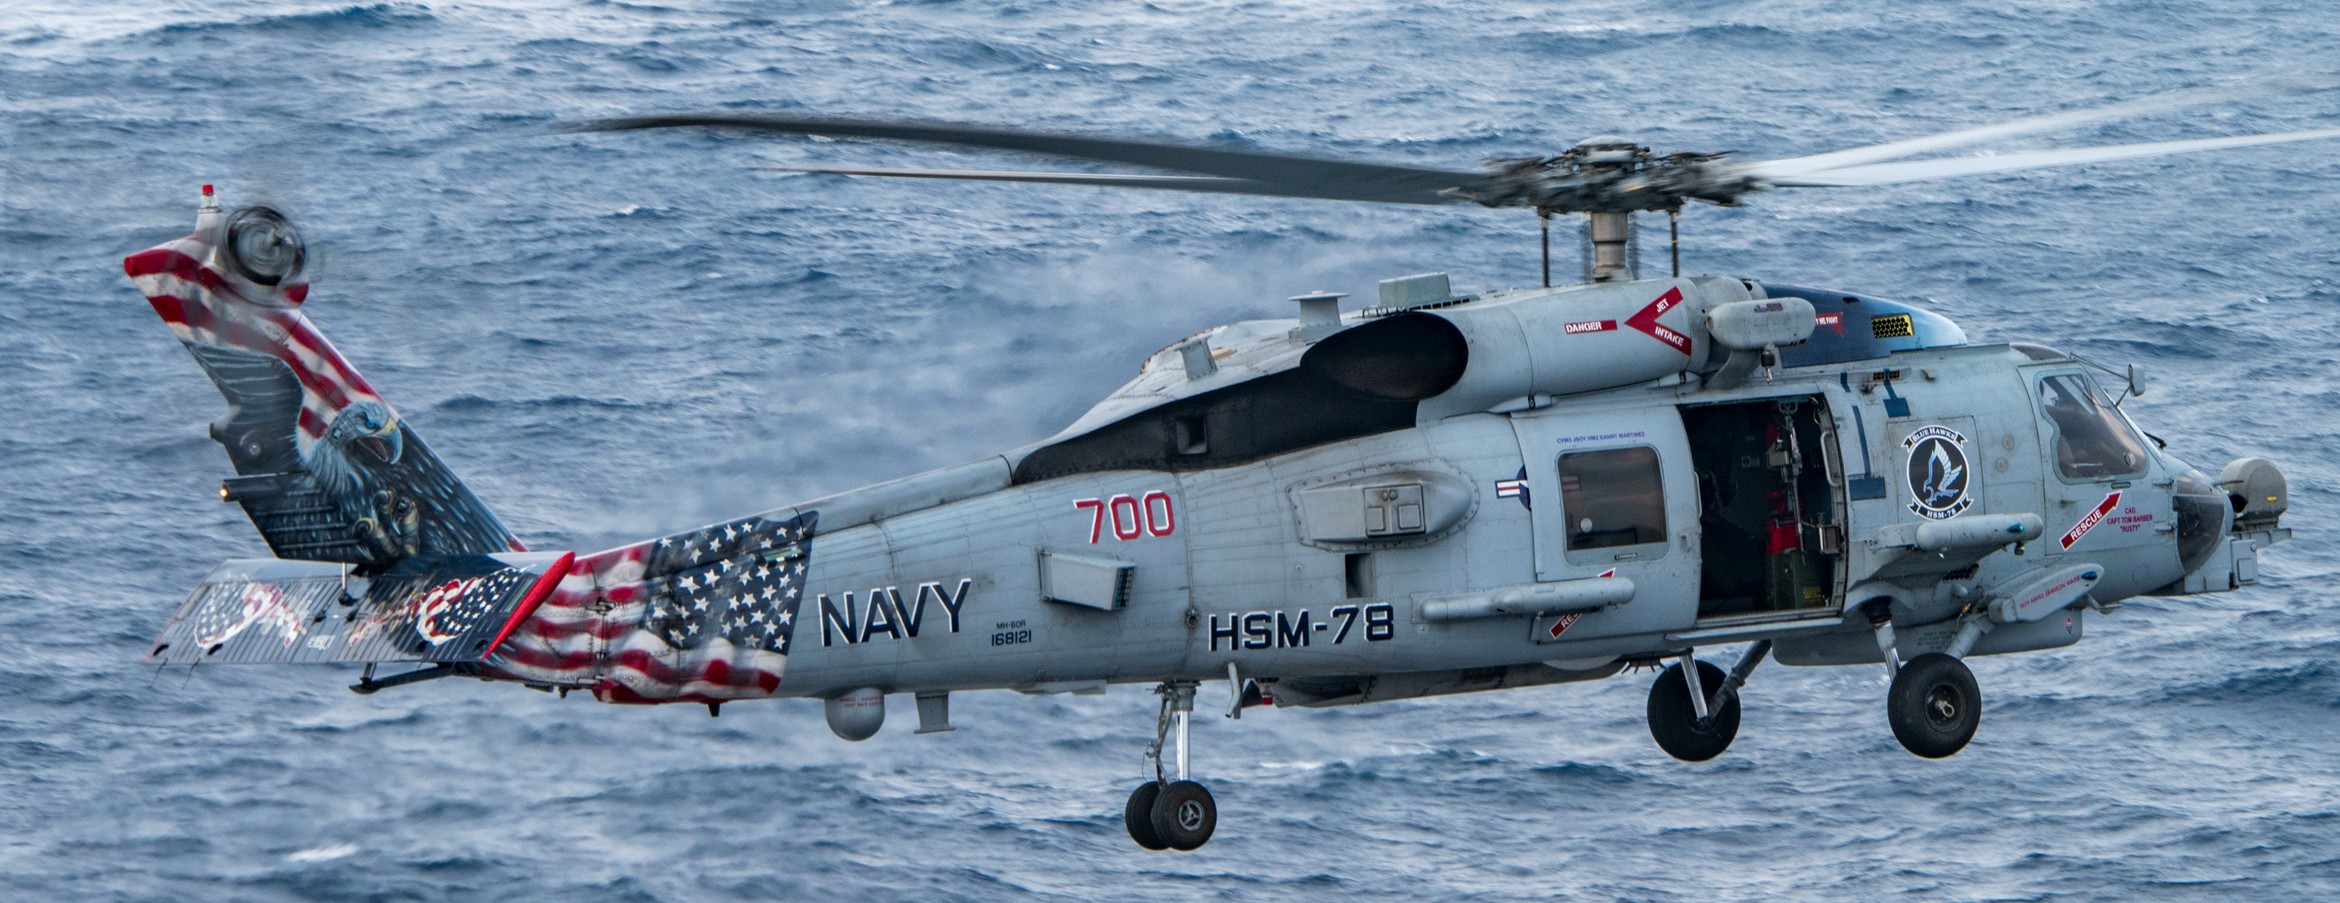 hsm-78 blue hawks helicopter maritime strike squadron mh-60r seahawk us navy 2017 10 uss carl vinson cvn-70 cvw-2